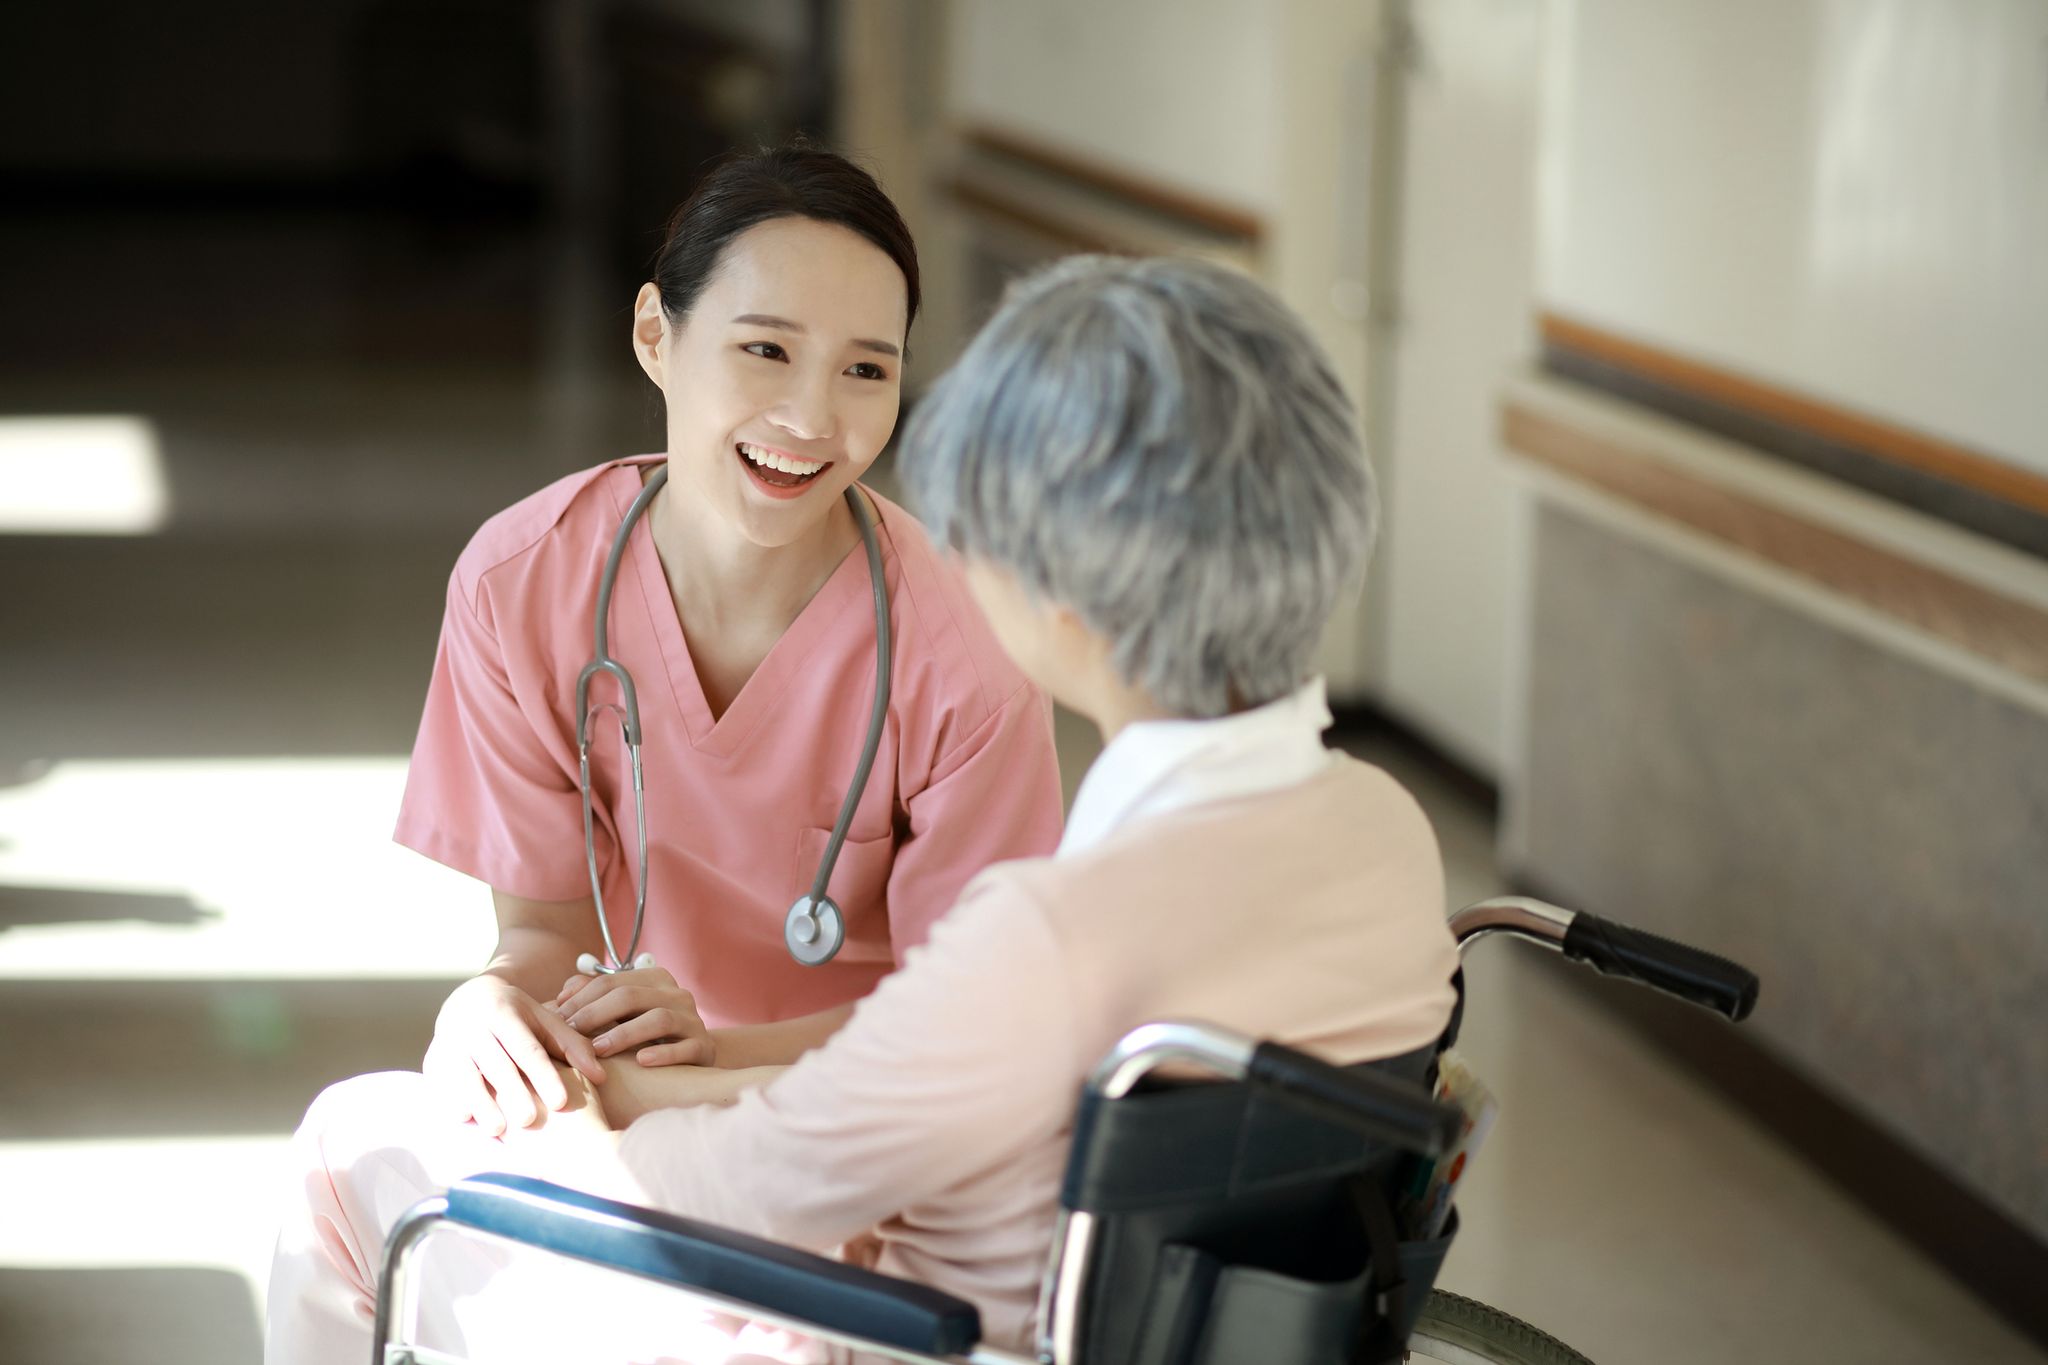 nurse caring for senior woman in wheelchair